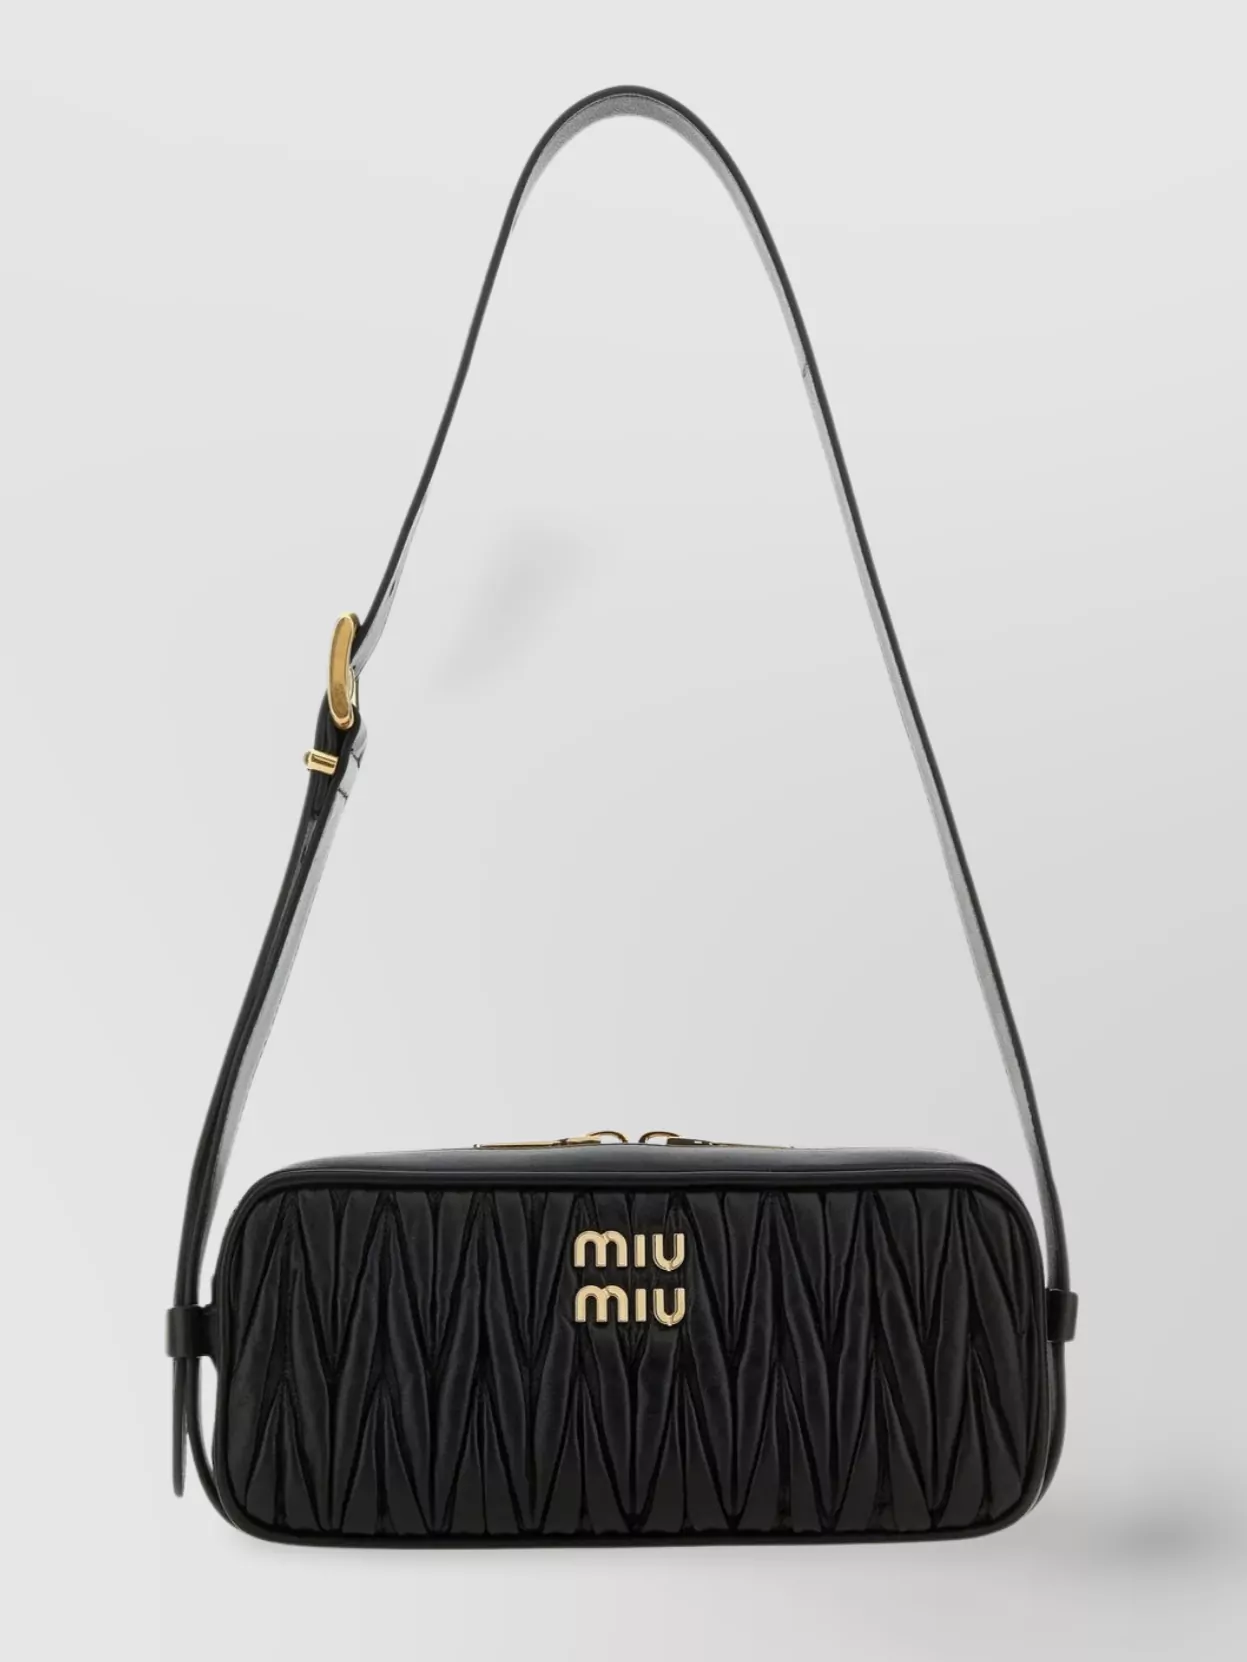 Miu Miu Quilted Leather Shoulder Bag In Black